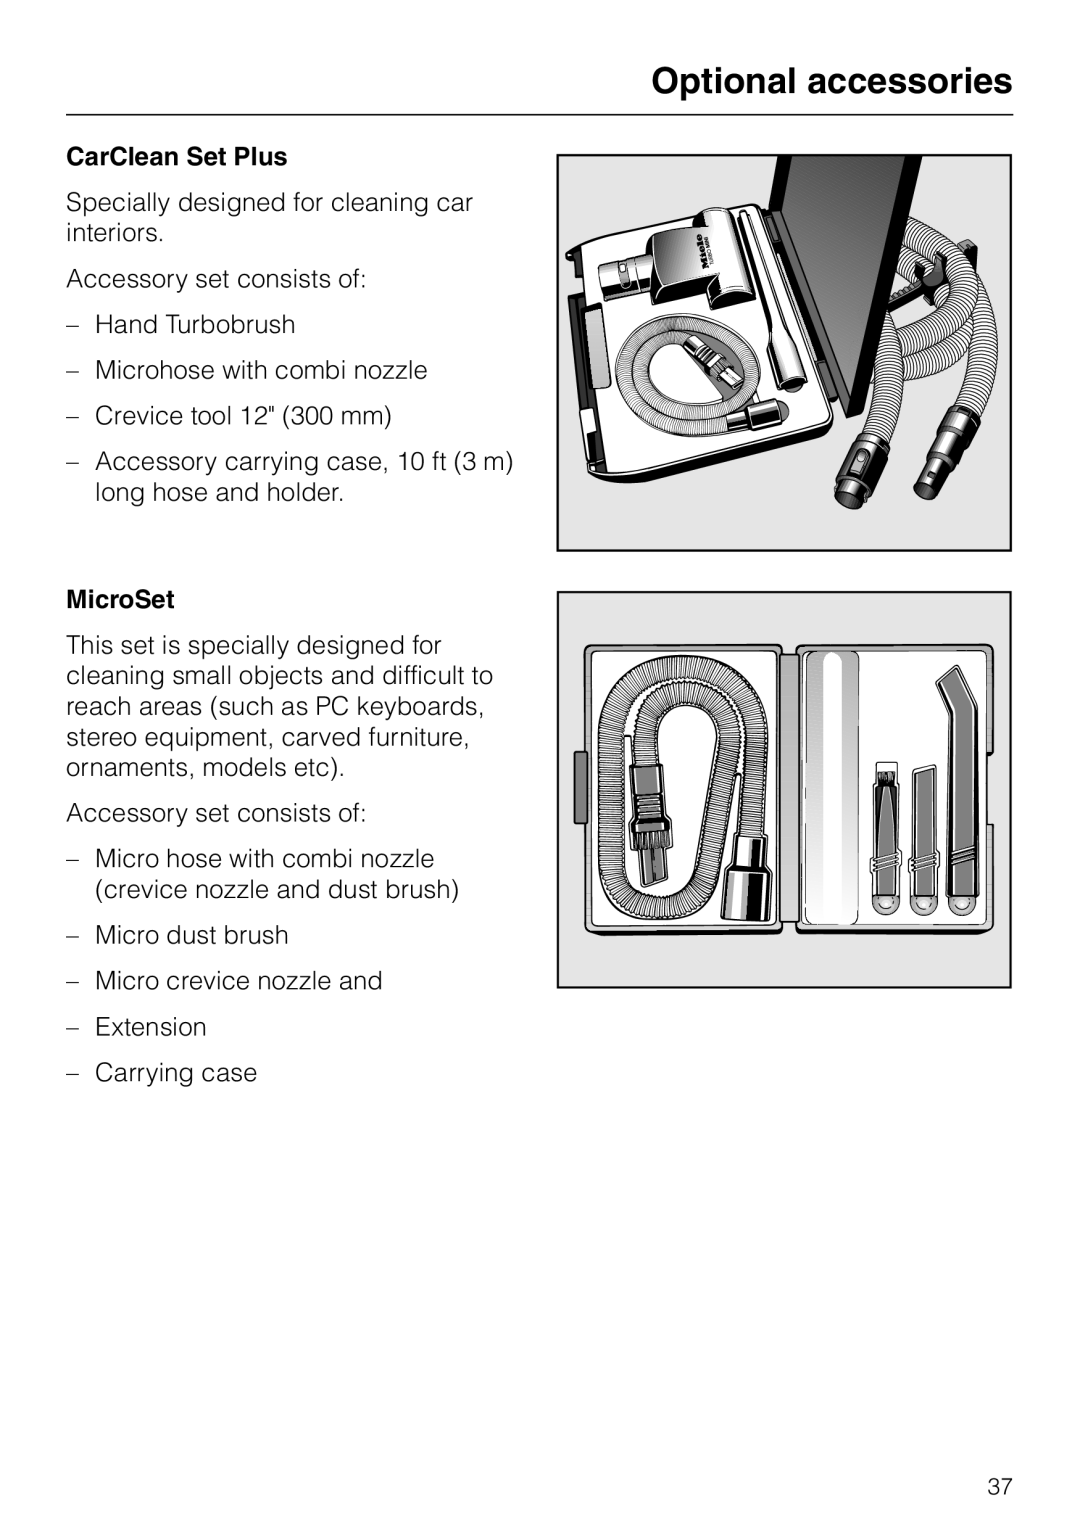 Miele S 300I, S 318I manual CarClean Set Plus, MicroSet, Optional accessories 